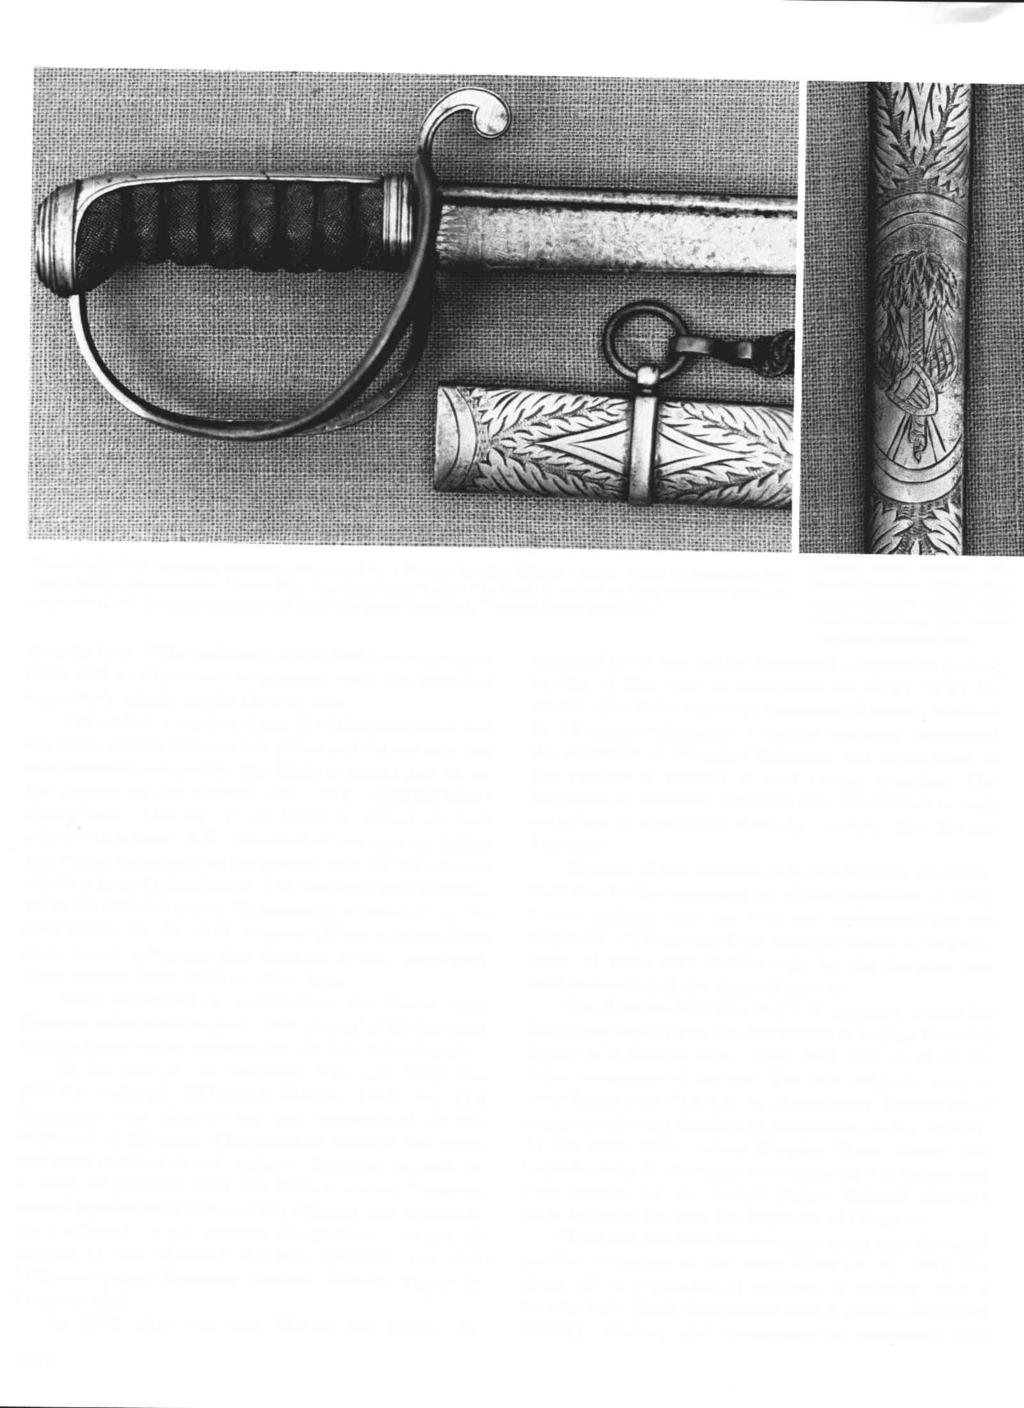 Center panel, obverse side, South Carolina Militia Dra- goon Officer,s brass scabbard, showing the South Carolina palmetto tree. Model 1833 U.S. Dragoon Officer's saber used by a South Carolina Militia Officer.